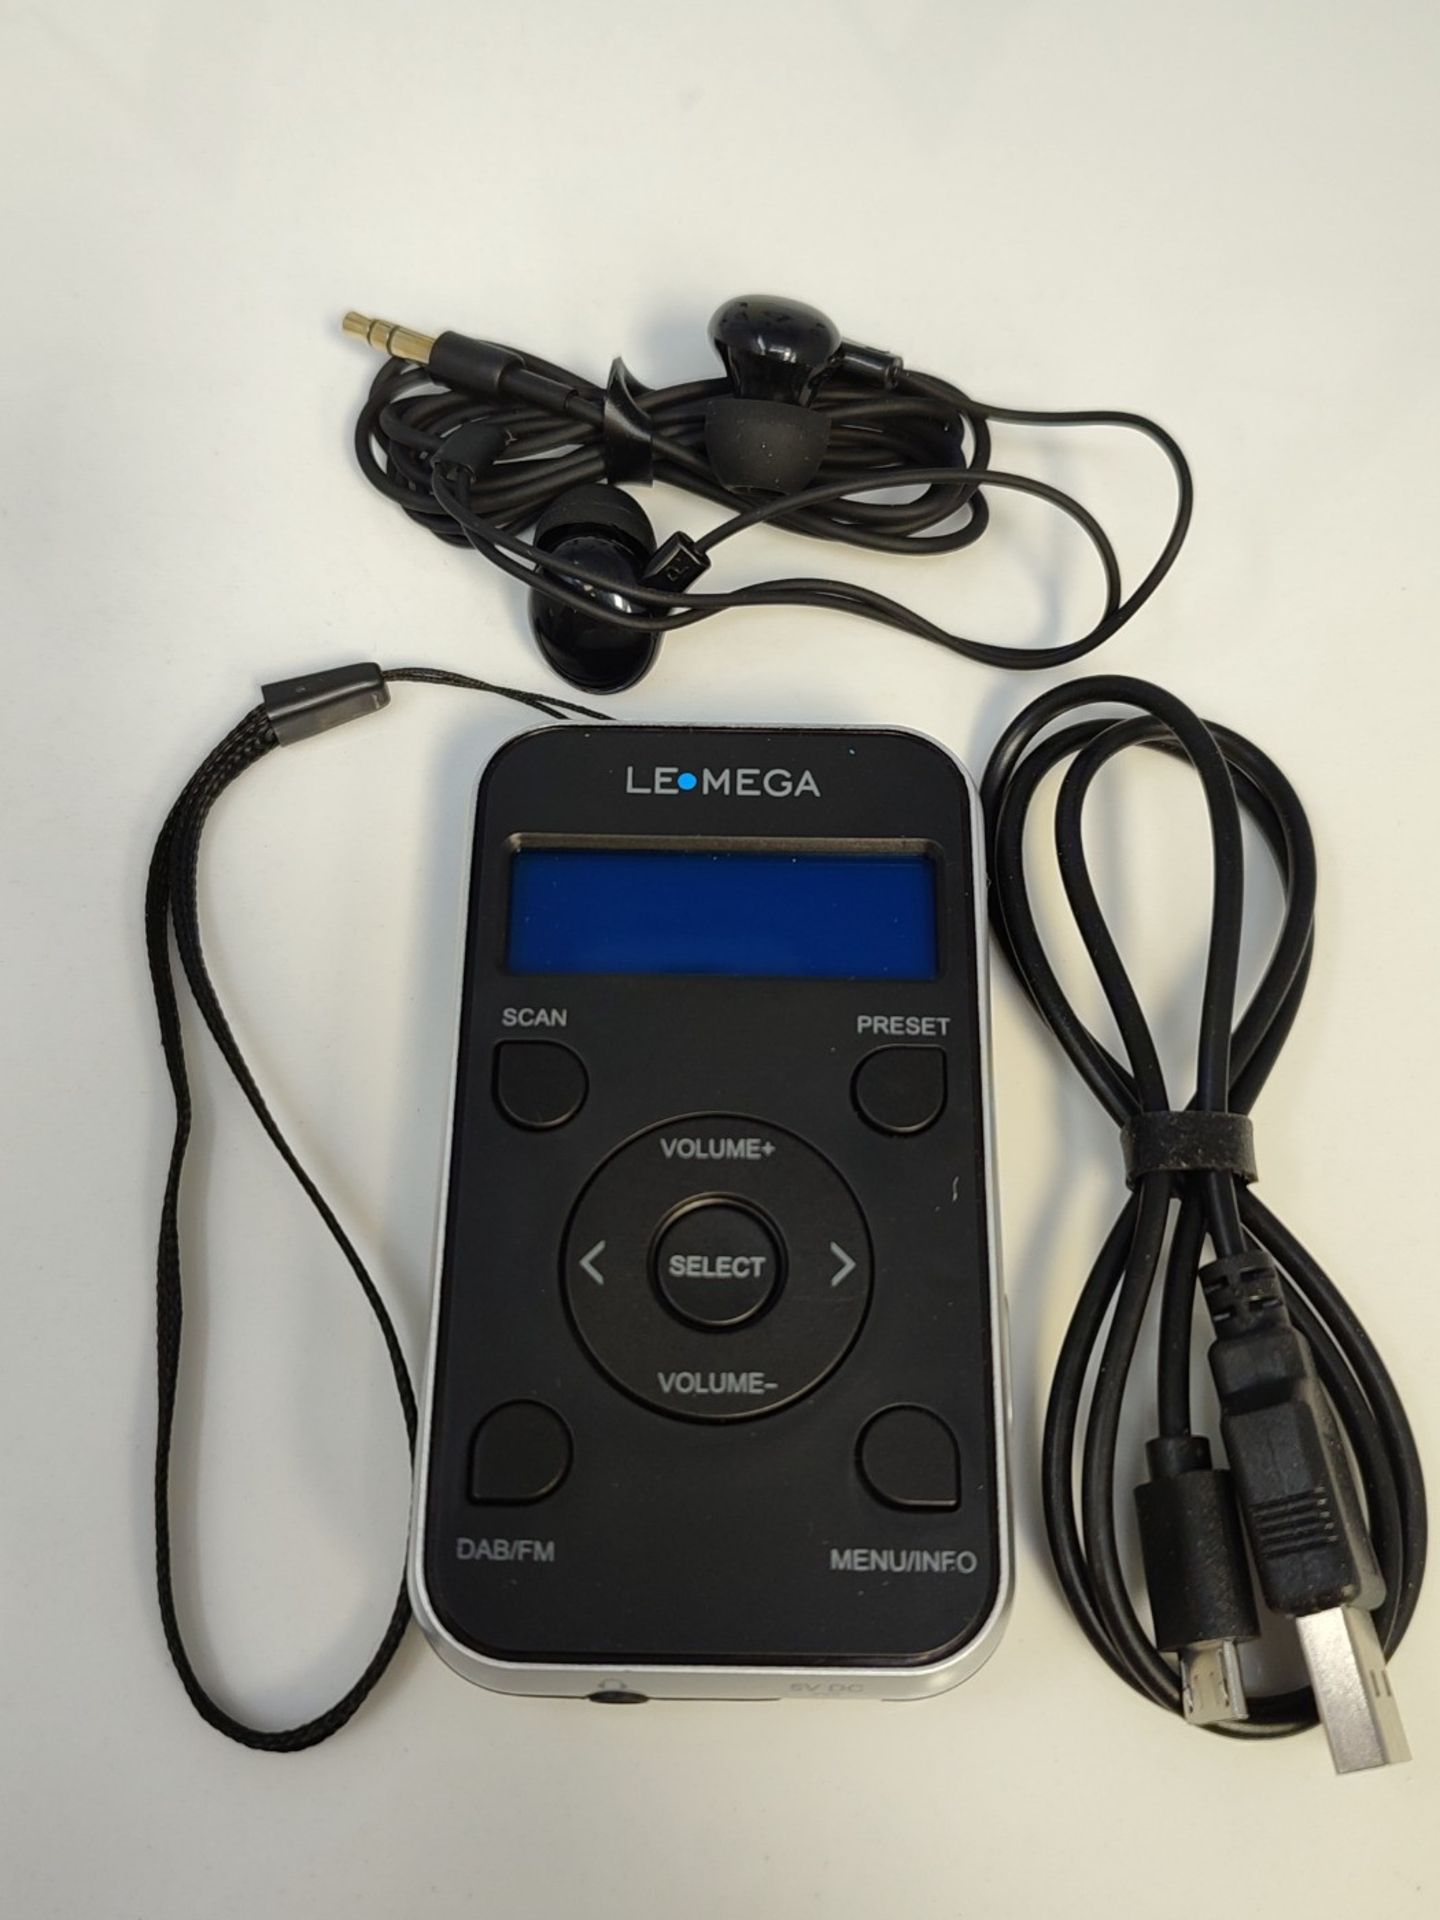 LEMEGA PR1 Pocket Dab/Dab+/FM Radio, Portable Radio with Sporty Design, Includes Earph - Image 2 of 2